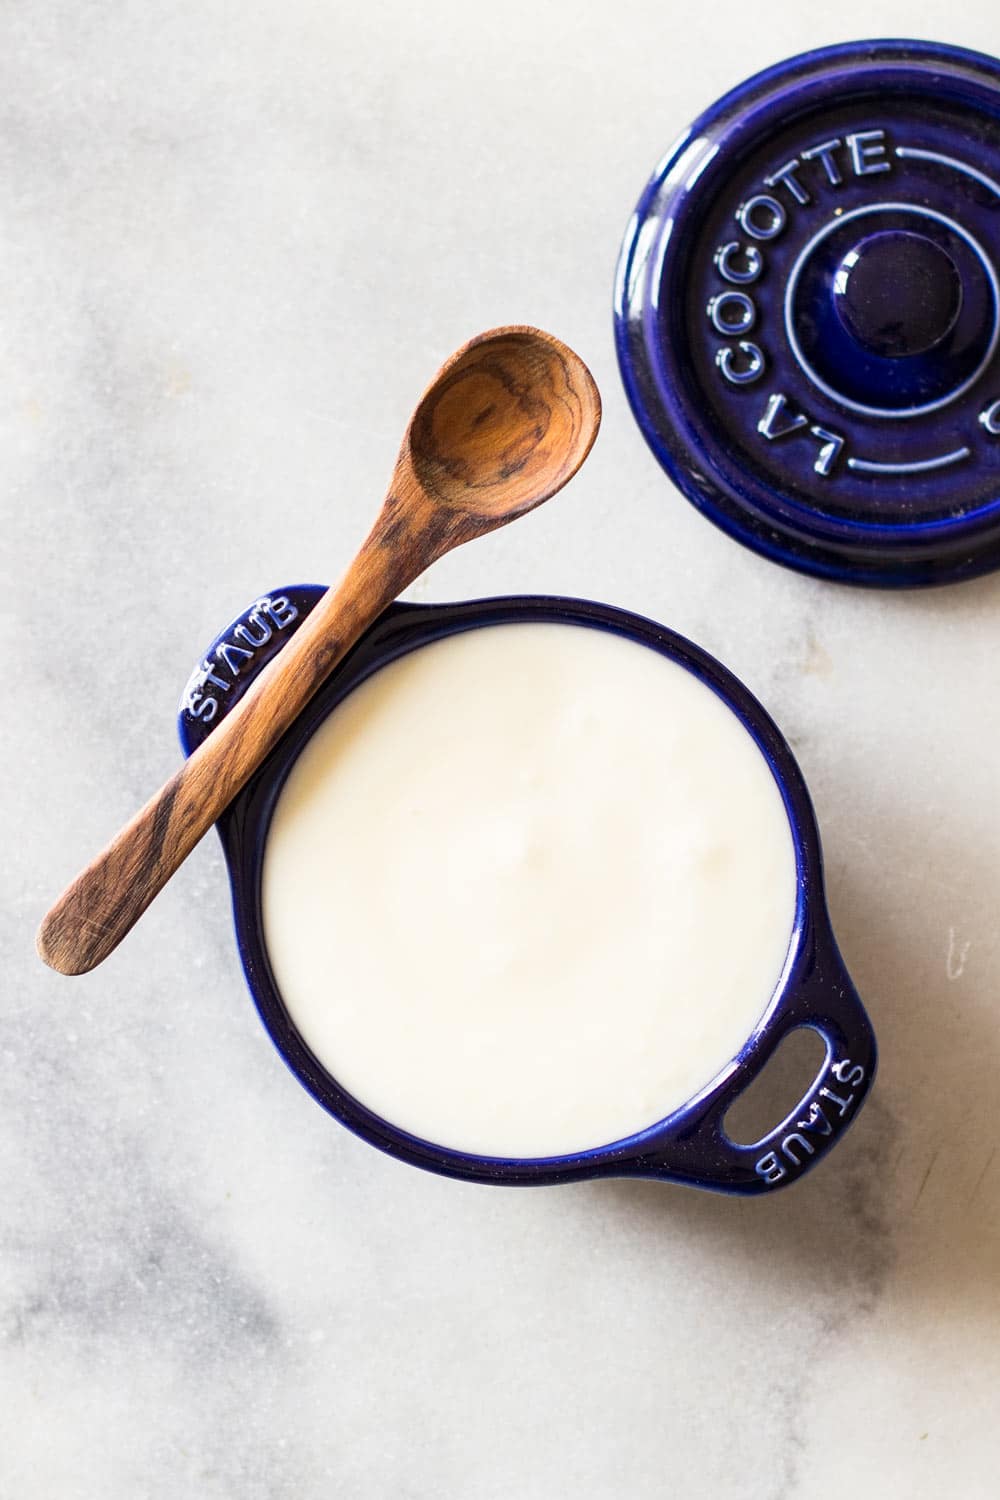 Yogurt Garlic Sauce in a blue ceramic dish with a wooden spoon.